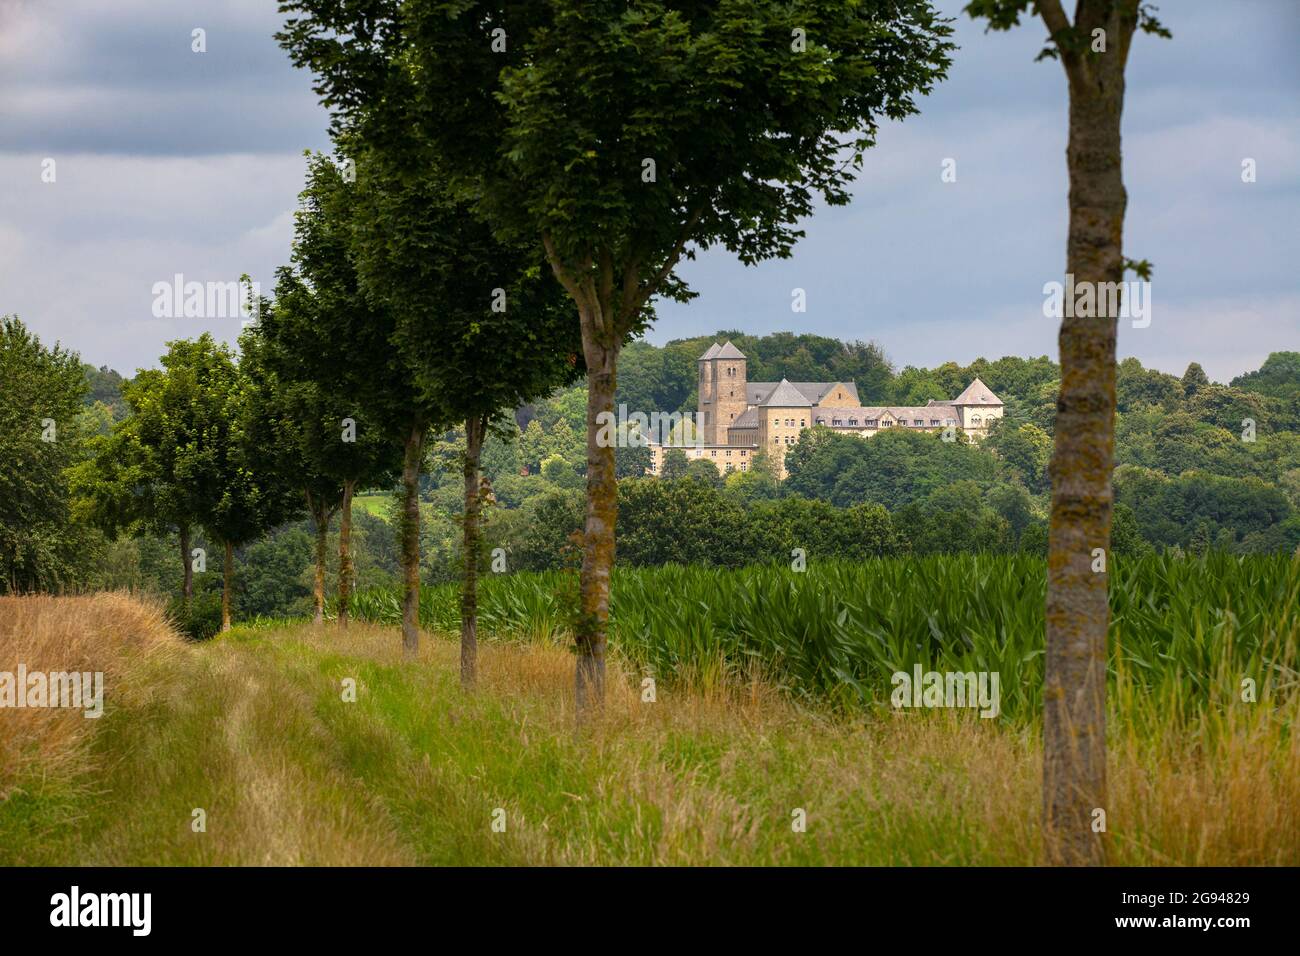 the Benedictine Abbey Gerleve in Billerbeck, Muensterland region, North Rhine-Westphalia, Germany.  die Benediktinerabtei Gerleve in Billerbeck, Muens Stock Photo